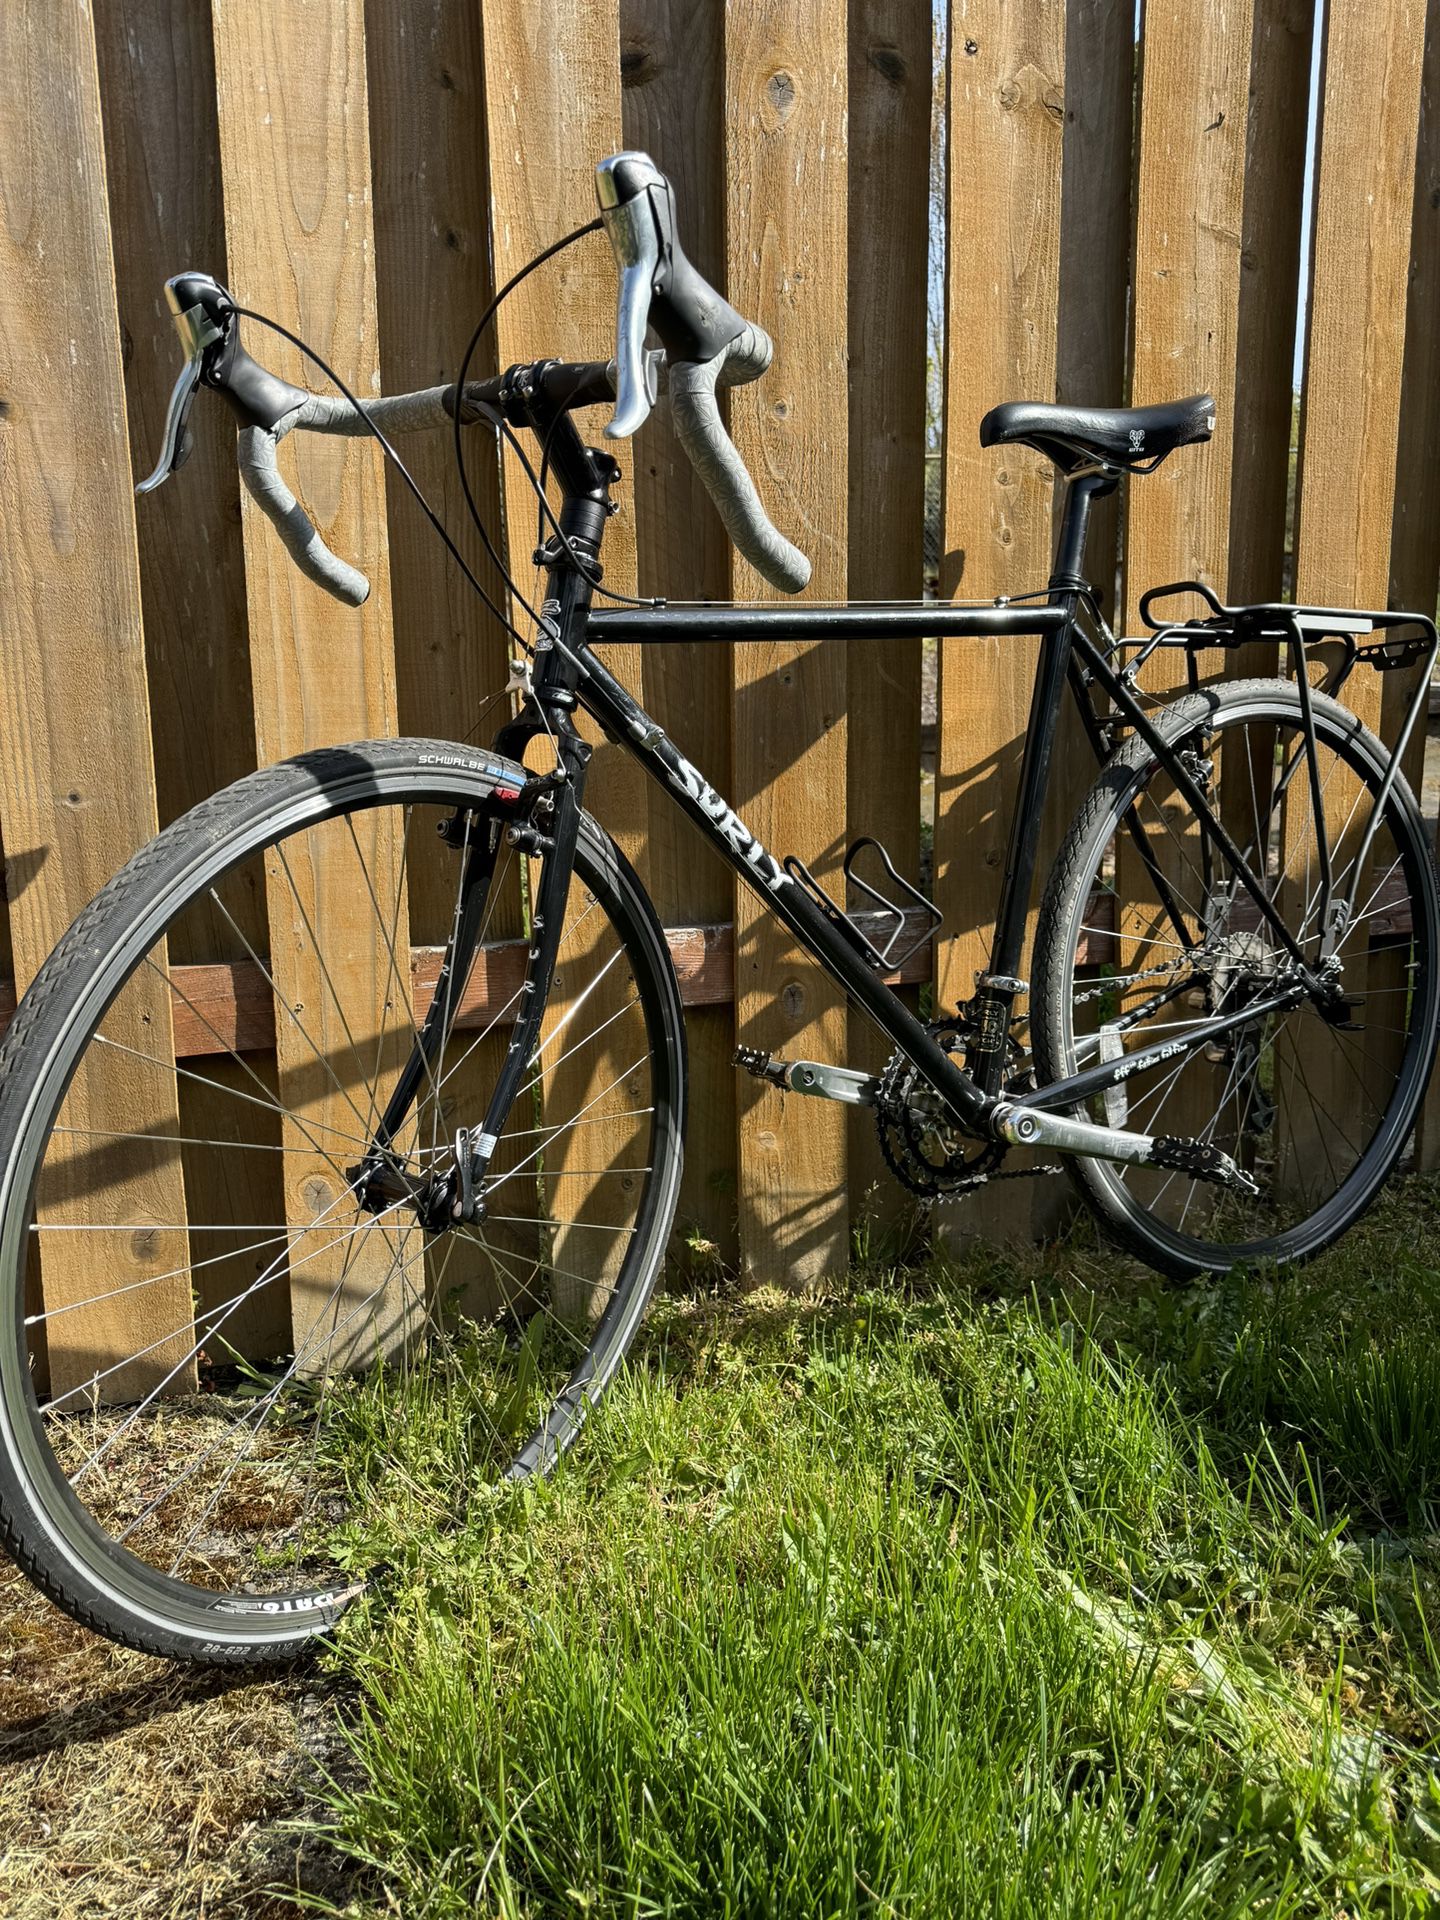 Surly Cross-Check Road Bike, Black, 52cm Frame